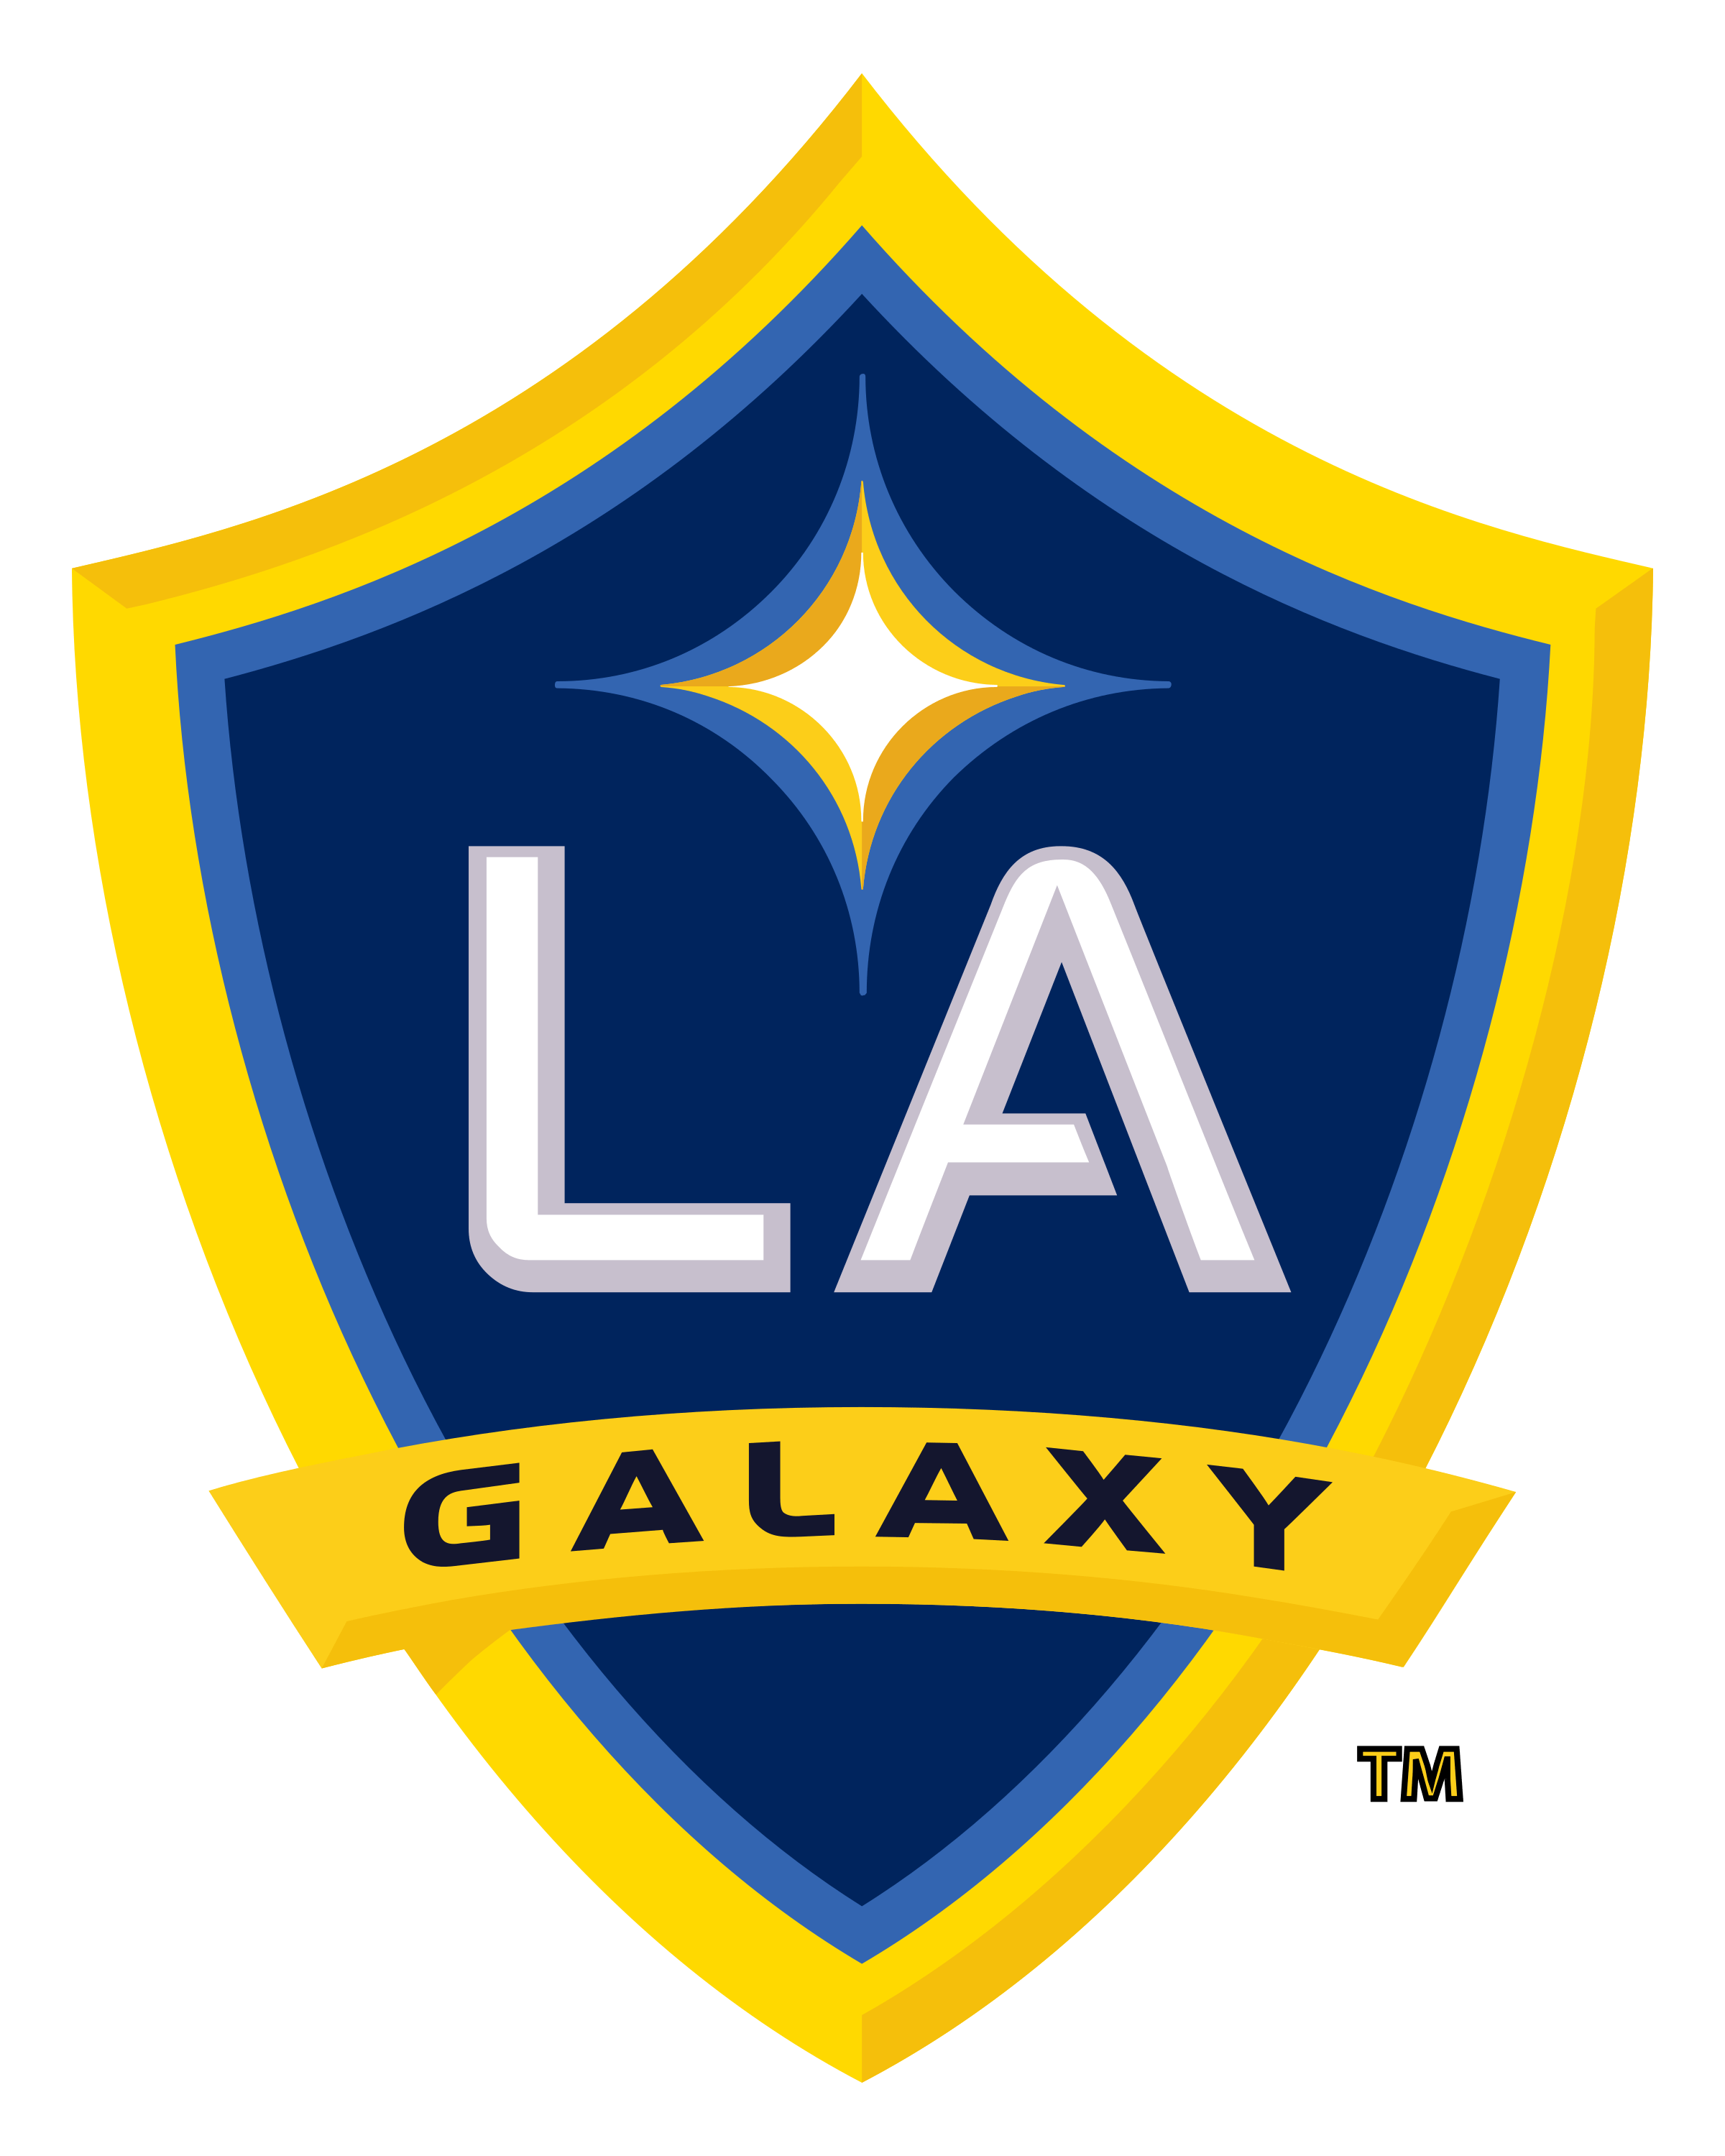 Galazy Logo - LA Galaxy Logo PNG Transparent & SVG Vector